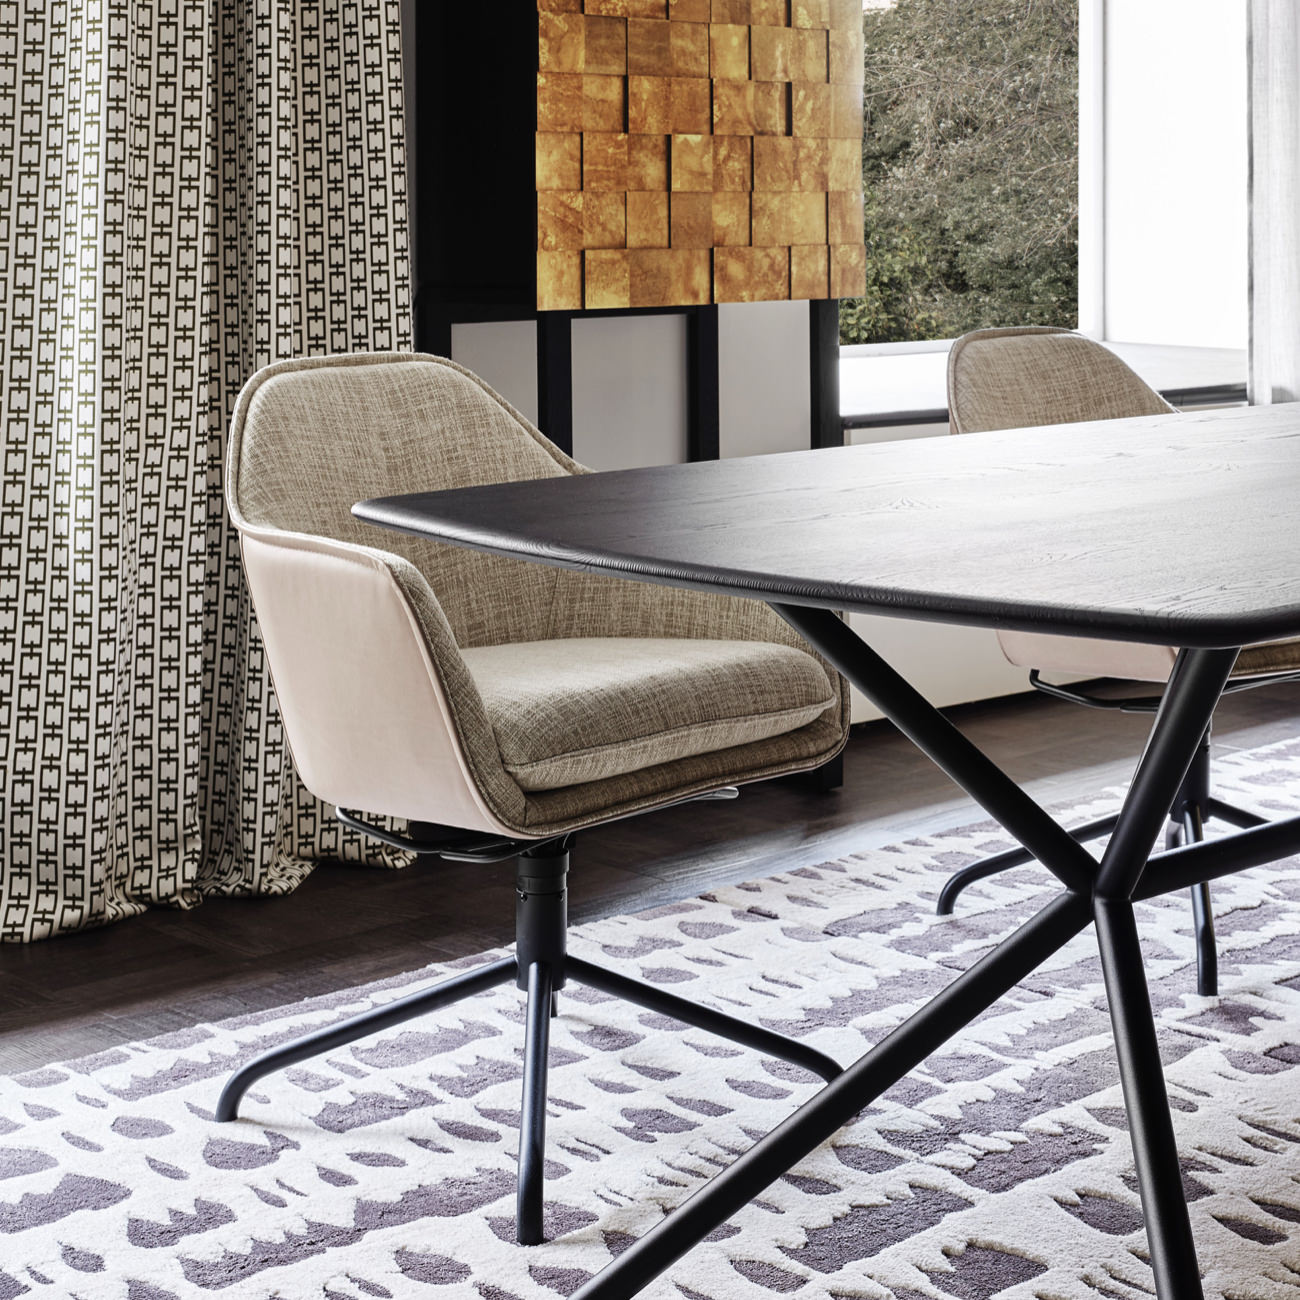 SOPHIE chair by Christine Kröncke Interior Design